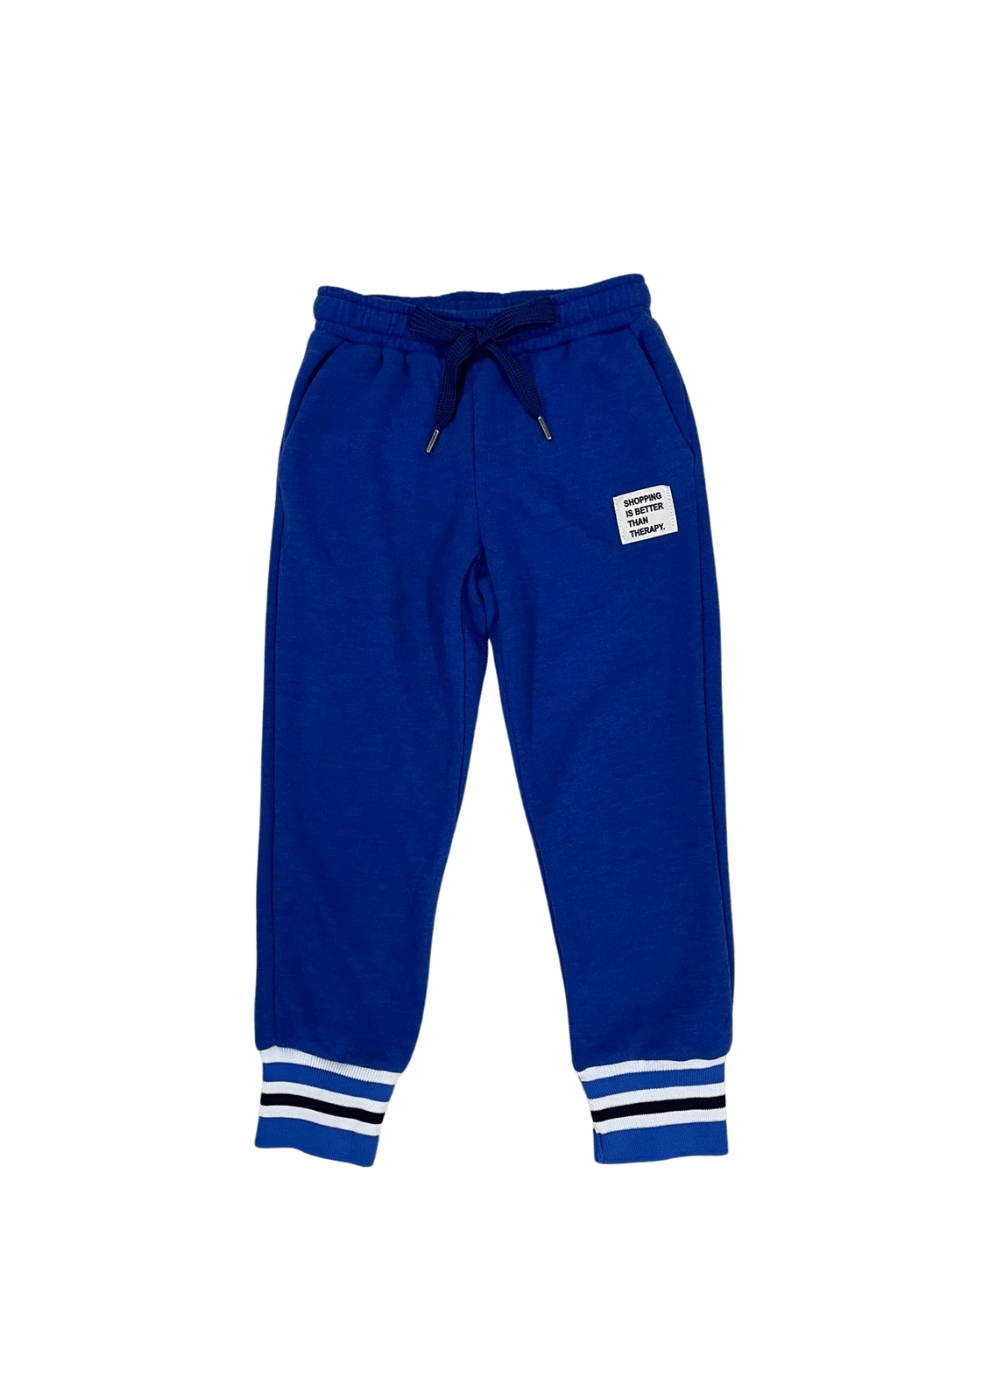 Featured image for “Lù Lù Pantalone Jogger Azzurro”